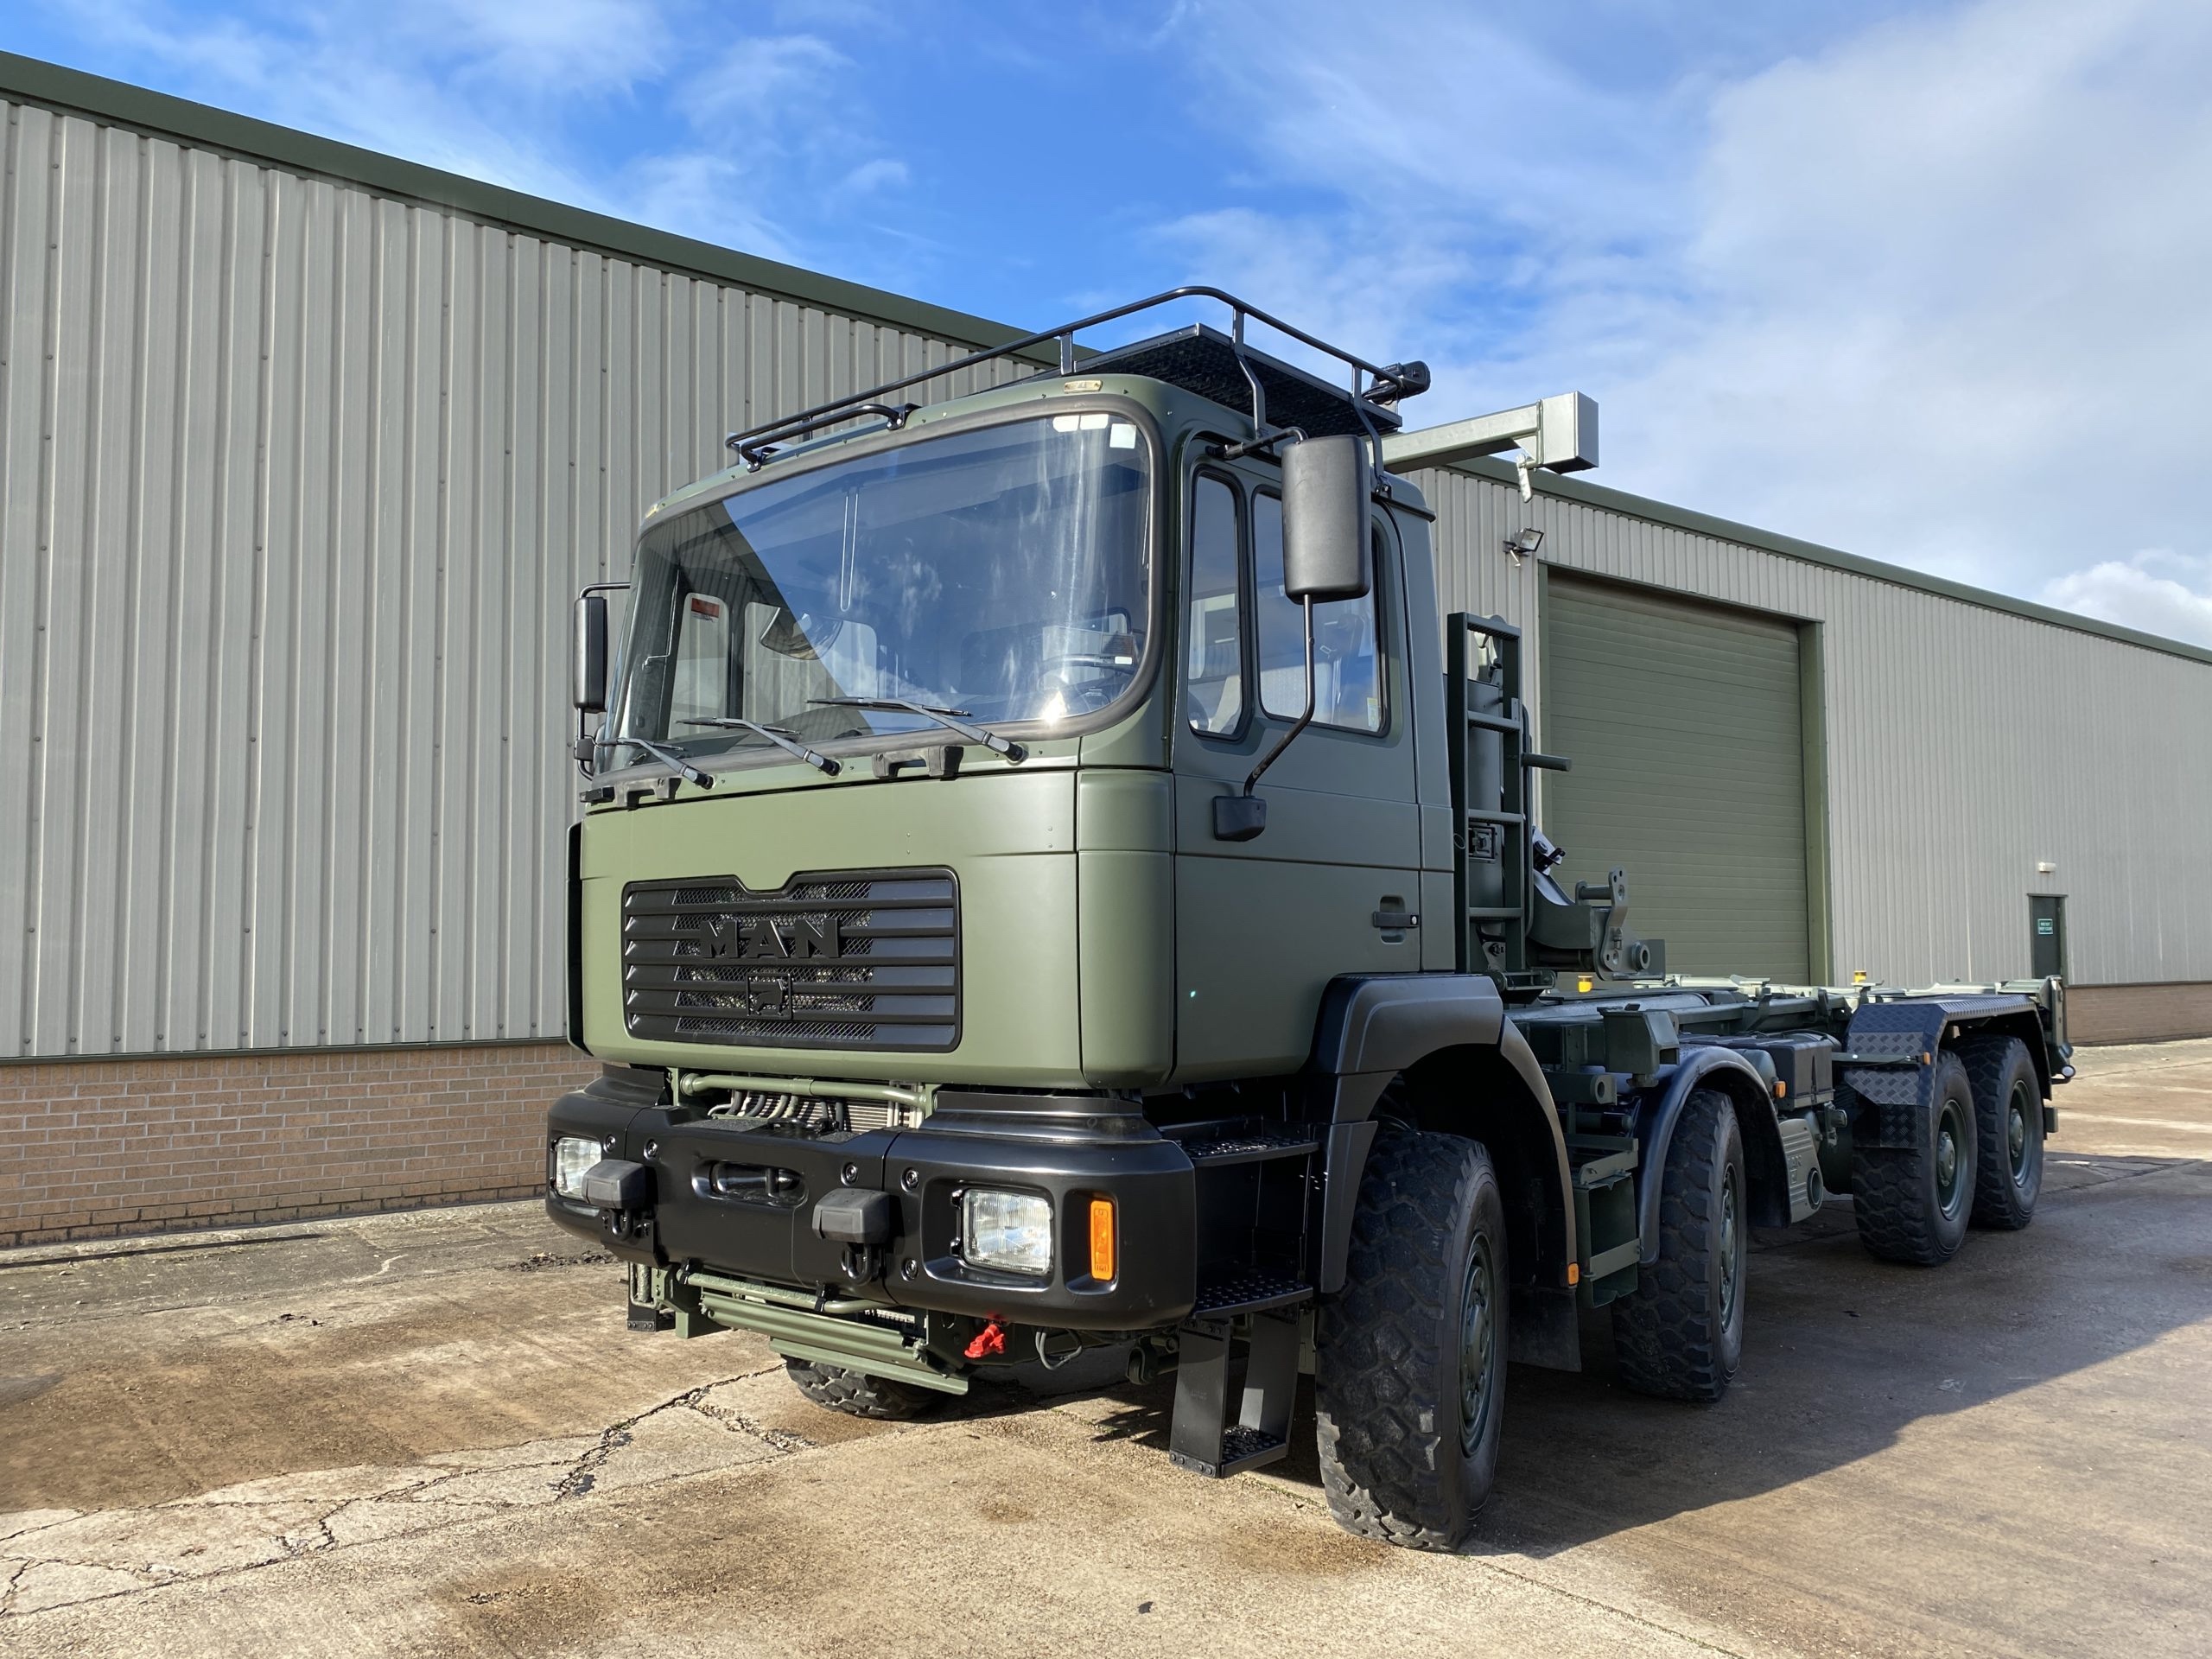 MAN 35.464 8x8 Drops Truck  - Govsales of ex military vehicles for sale, mod surplus